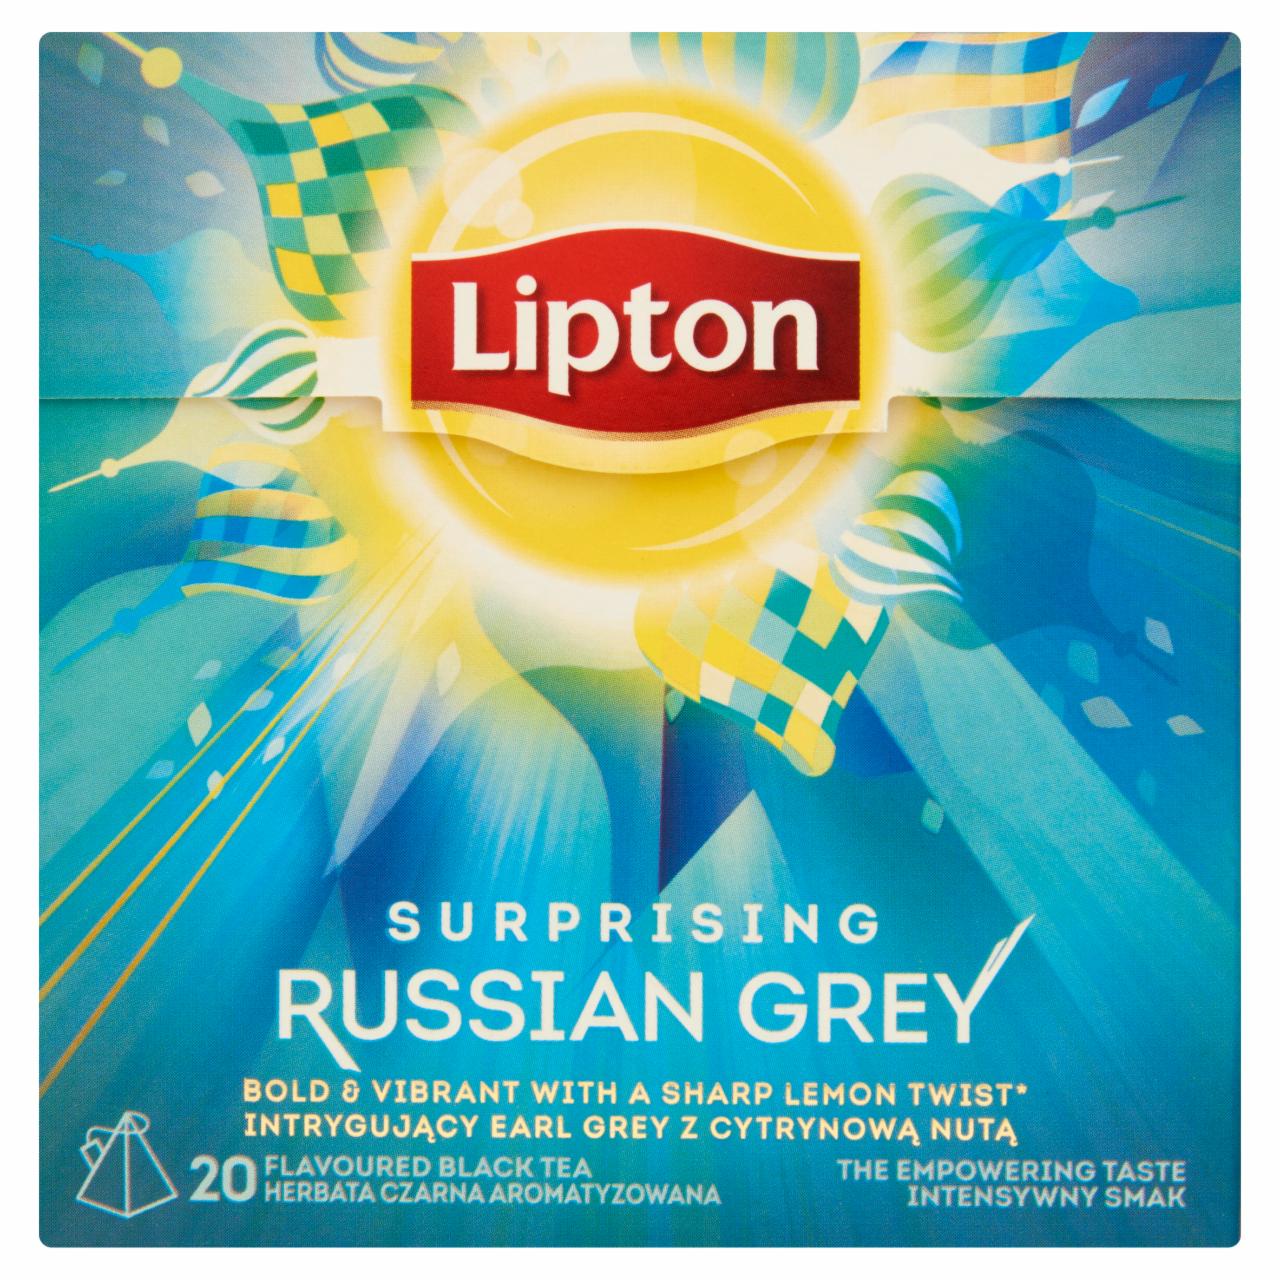 Képek - Lipton Surprising Russian Grey bergamott ízesítésű fekete tea 20 piramis filter